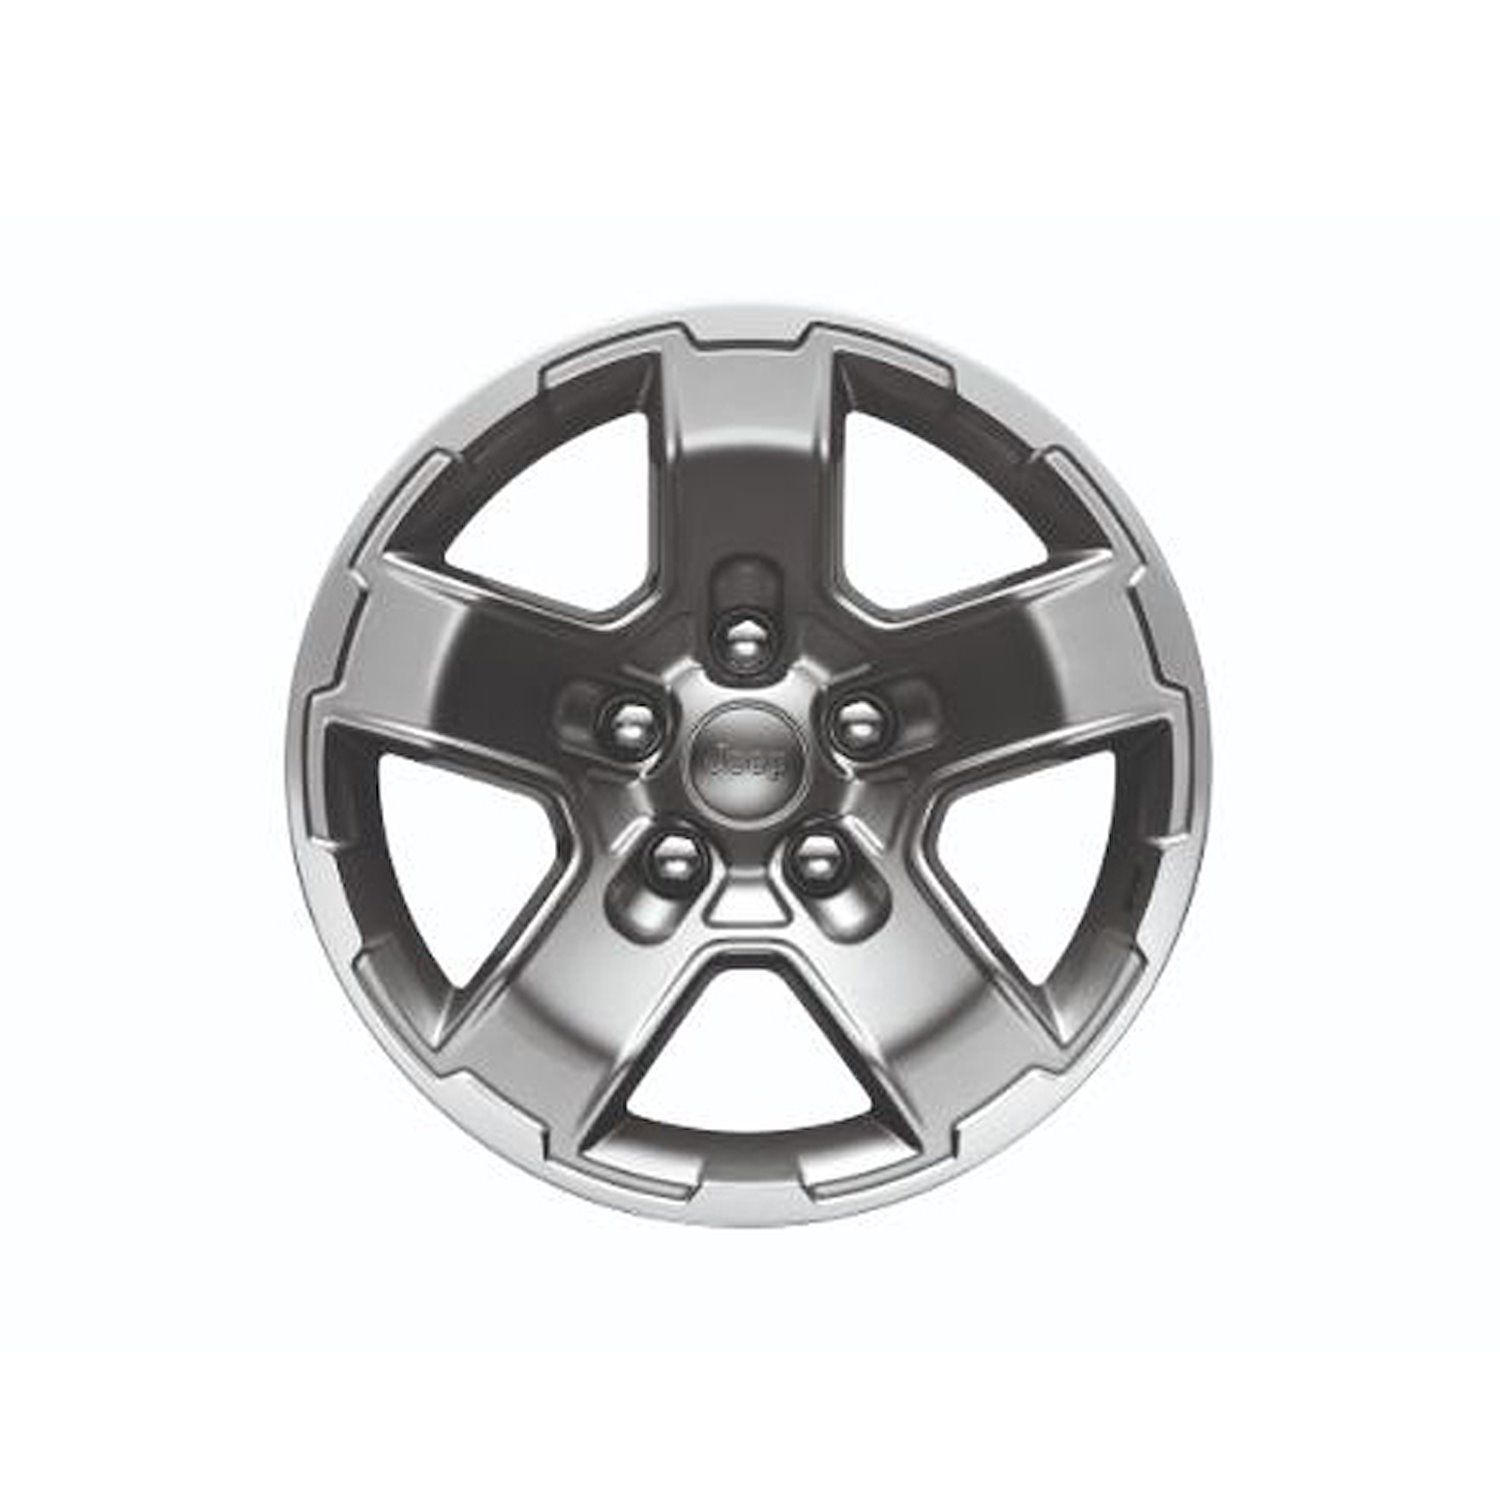 Gear Design 17 in. Cast Aluminum Wheel for